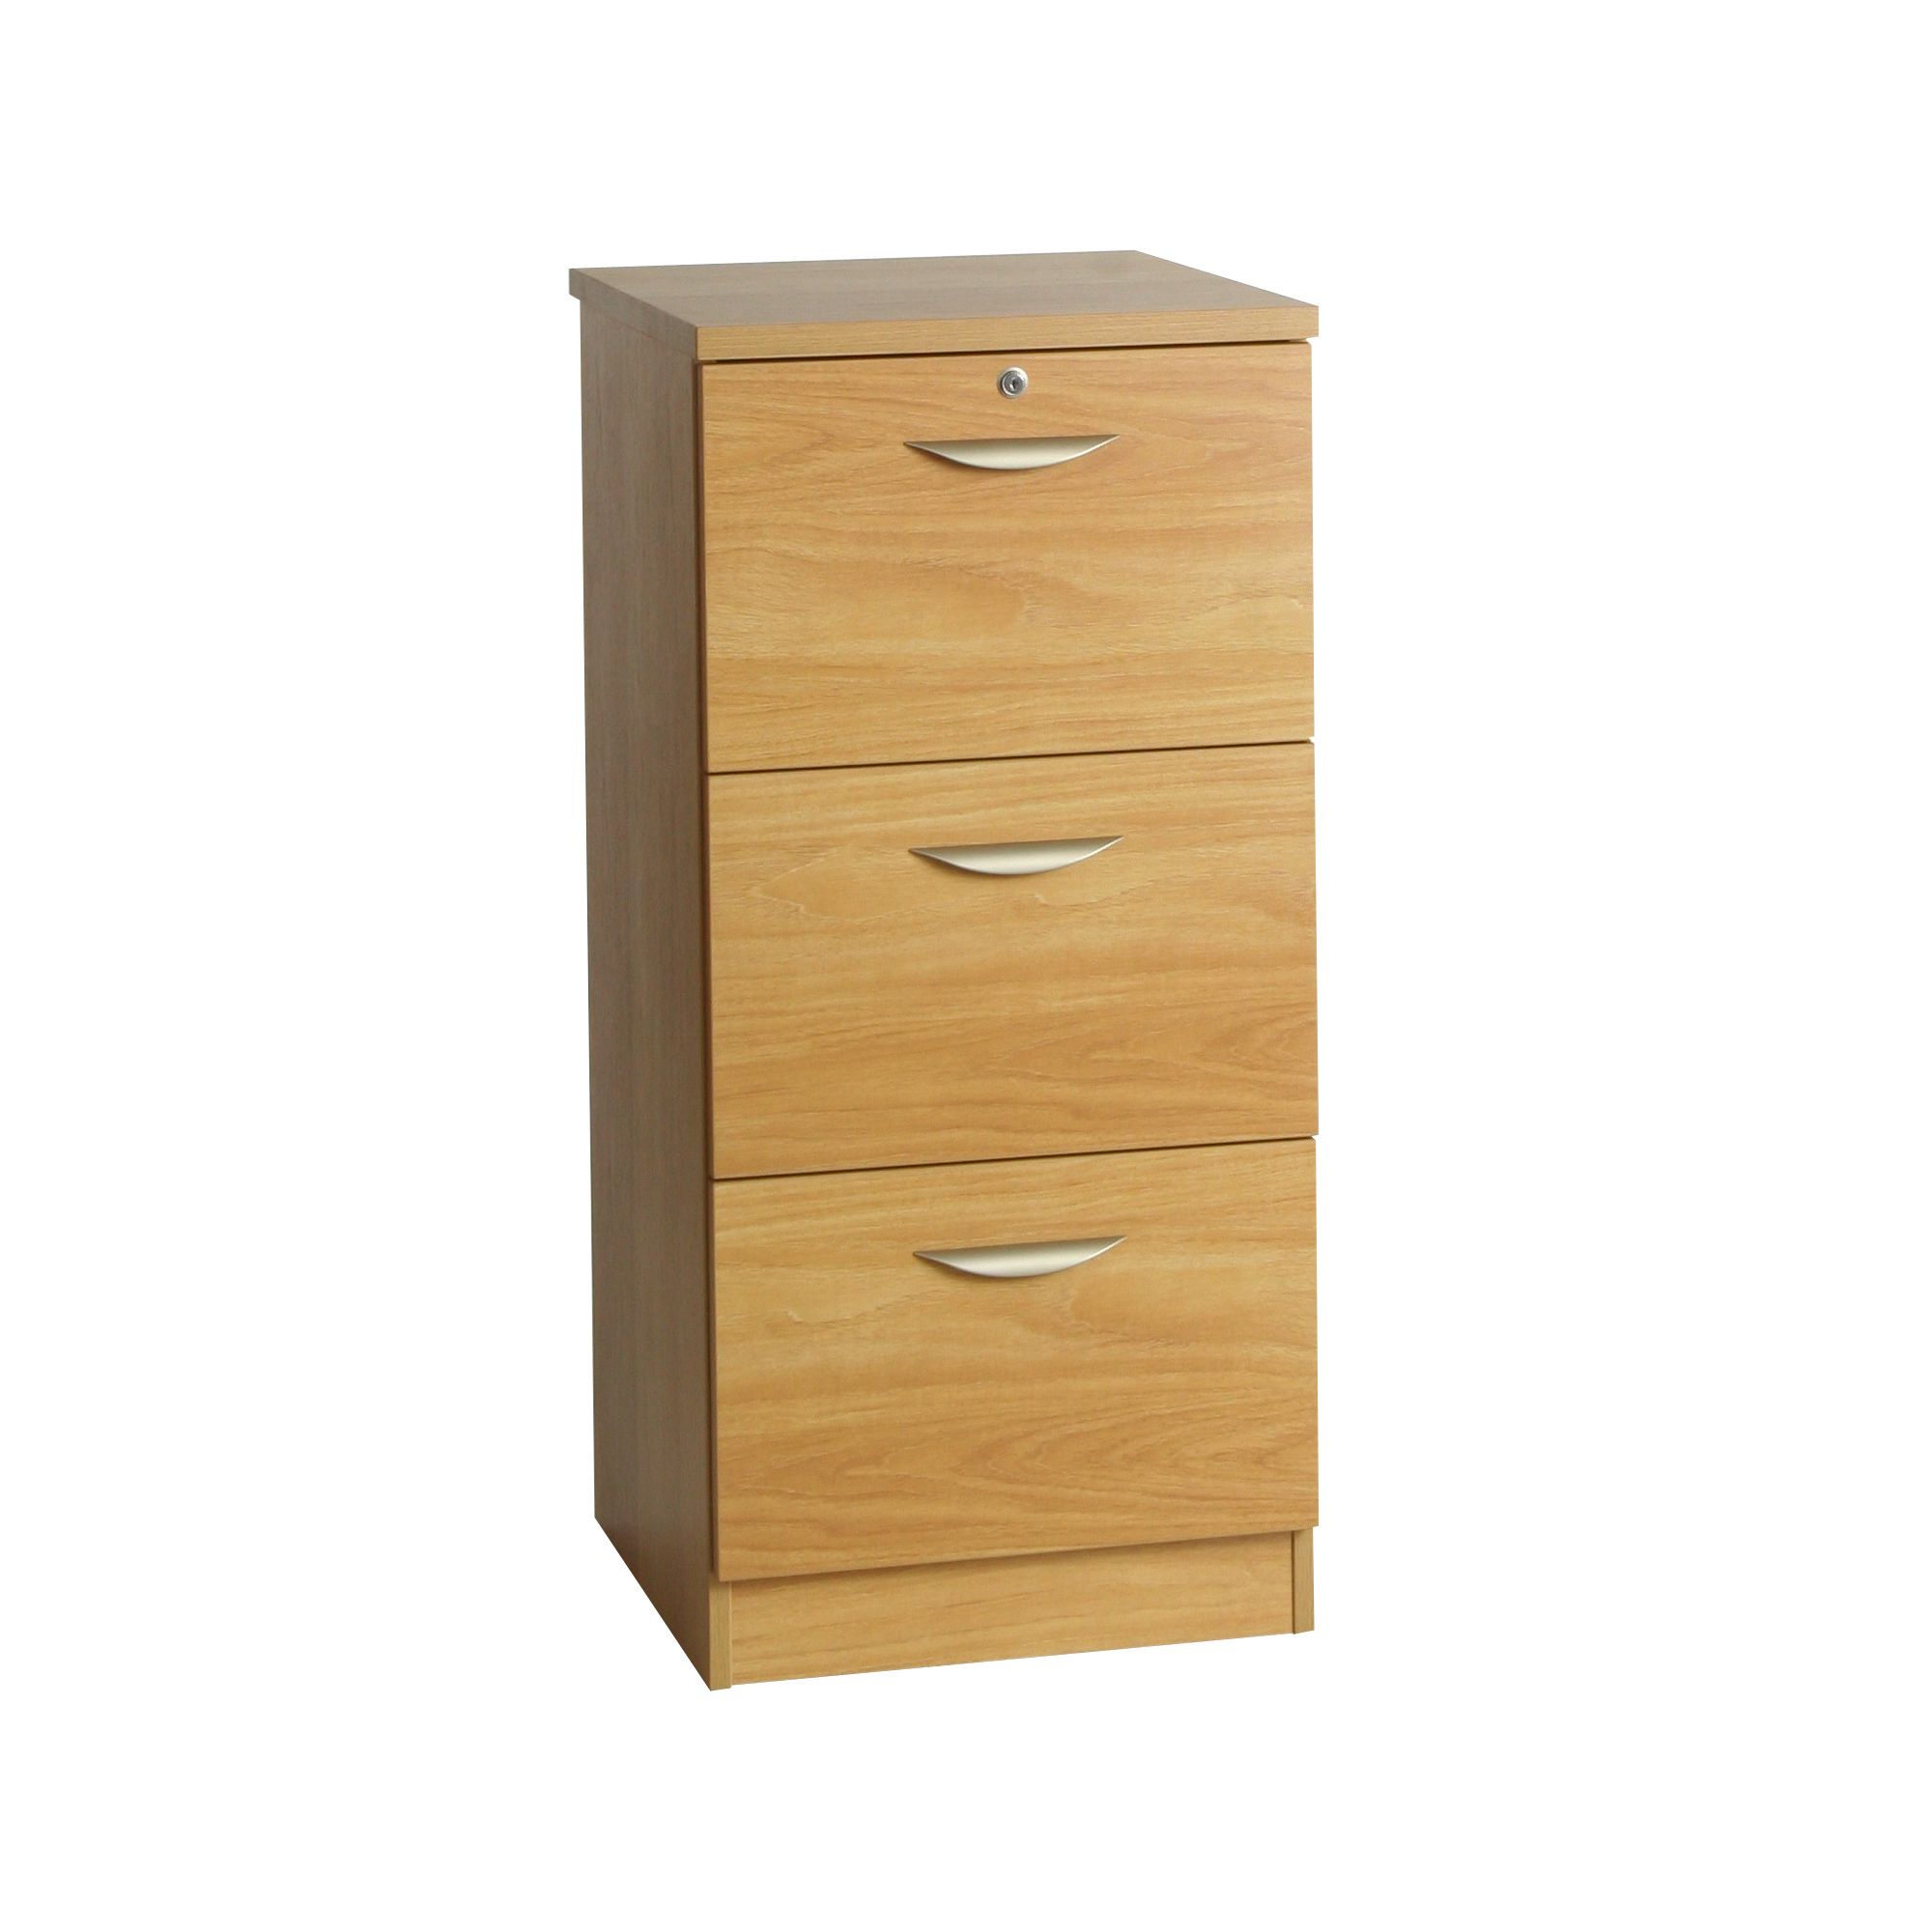 Enduro Three Drawer Tall Wooden Filing Cabinet - Warm Oak at Tesco Direct